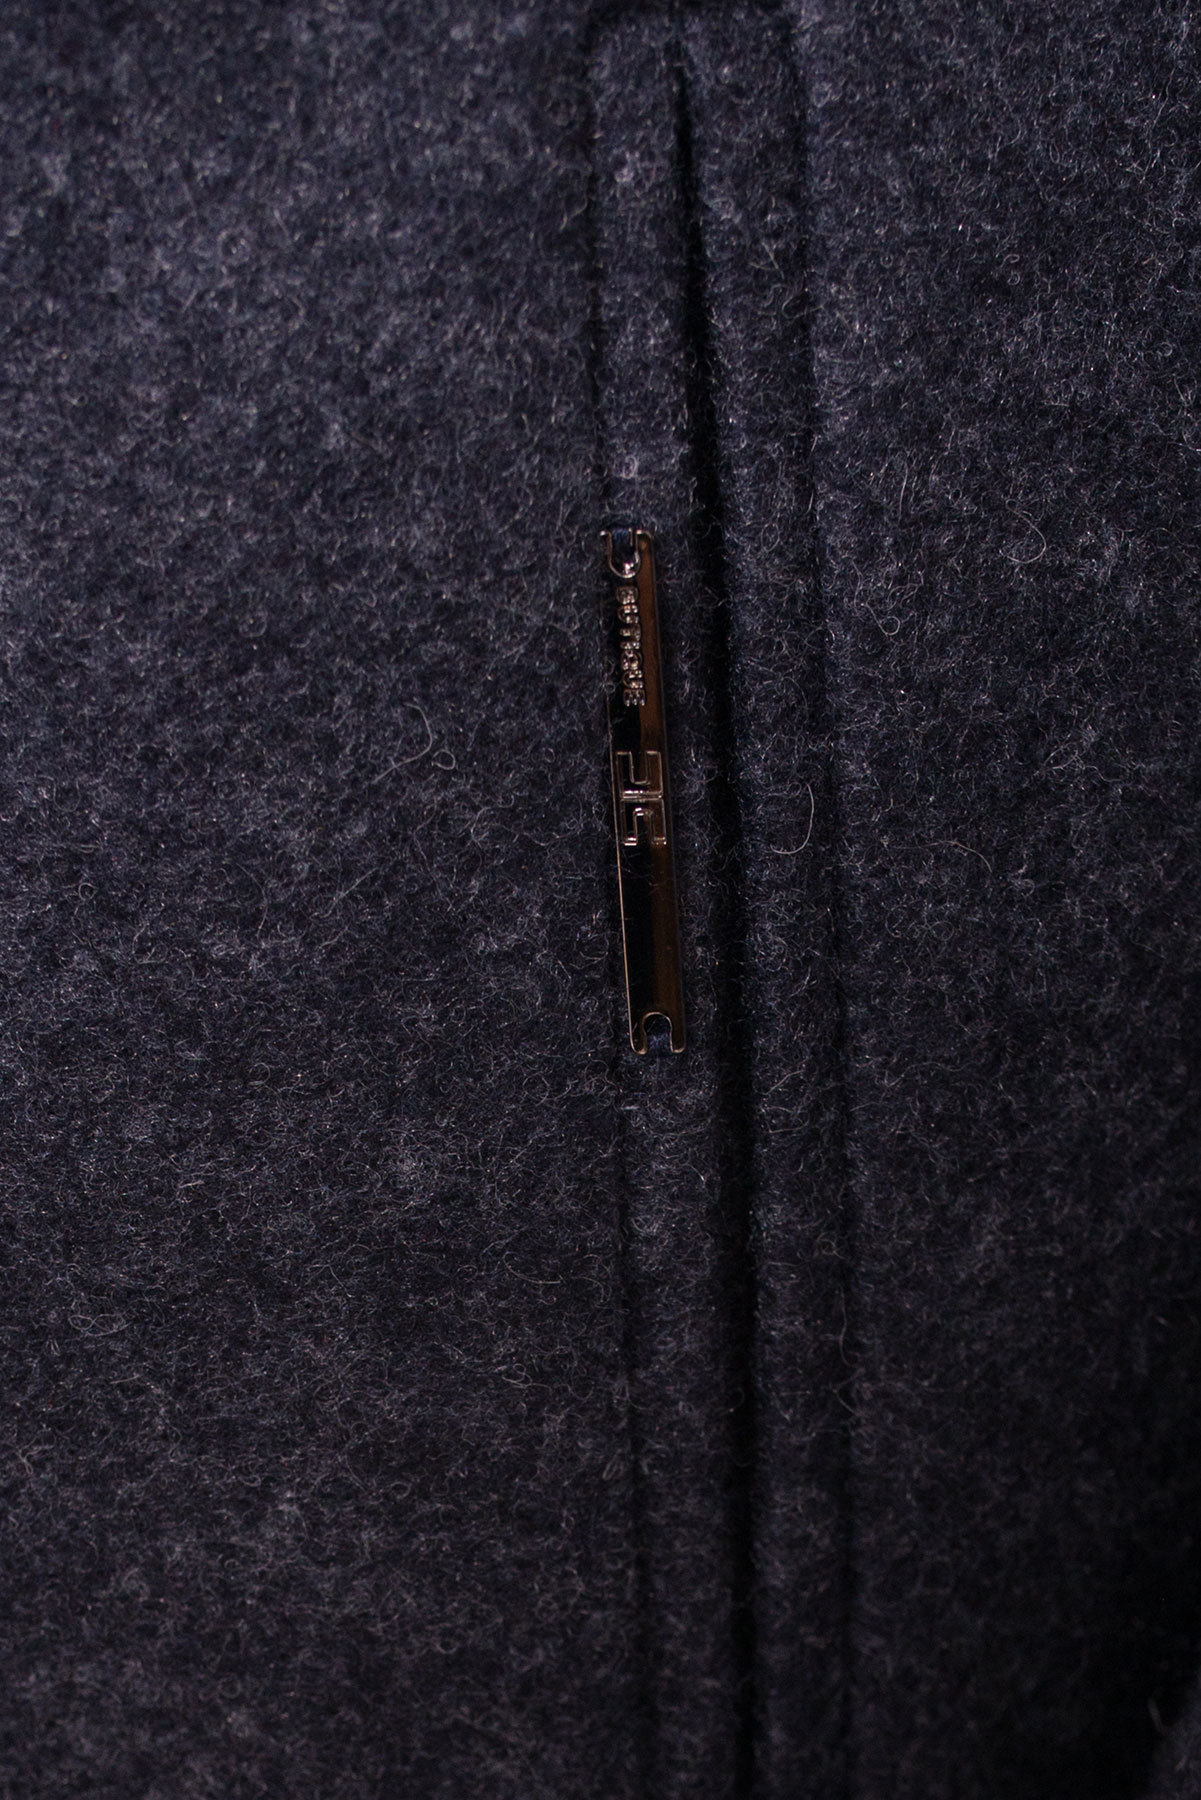 Демисезонное пальто Ферран 5369 АРТ. 36594 Цвет: Темно-синий - фото 5, интернет магазин tm-modus.ru